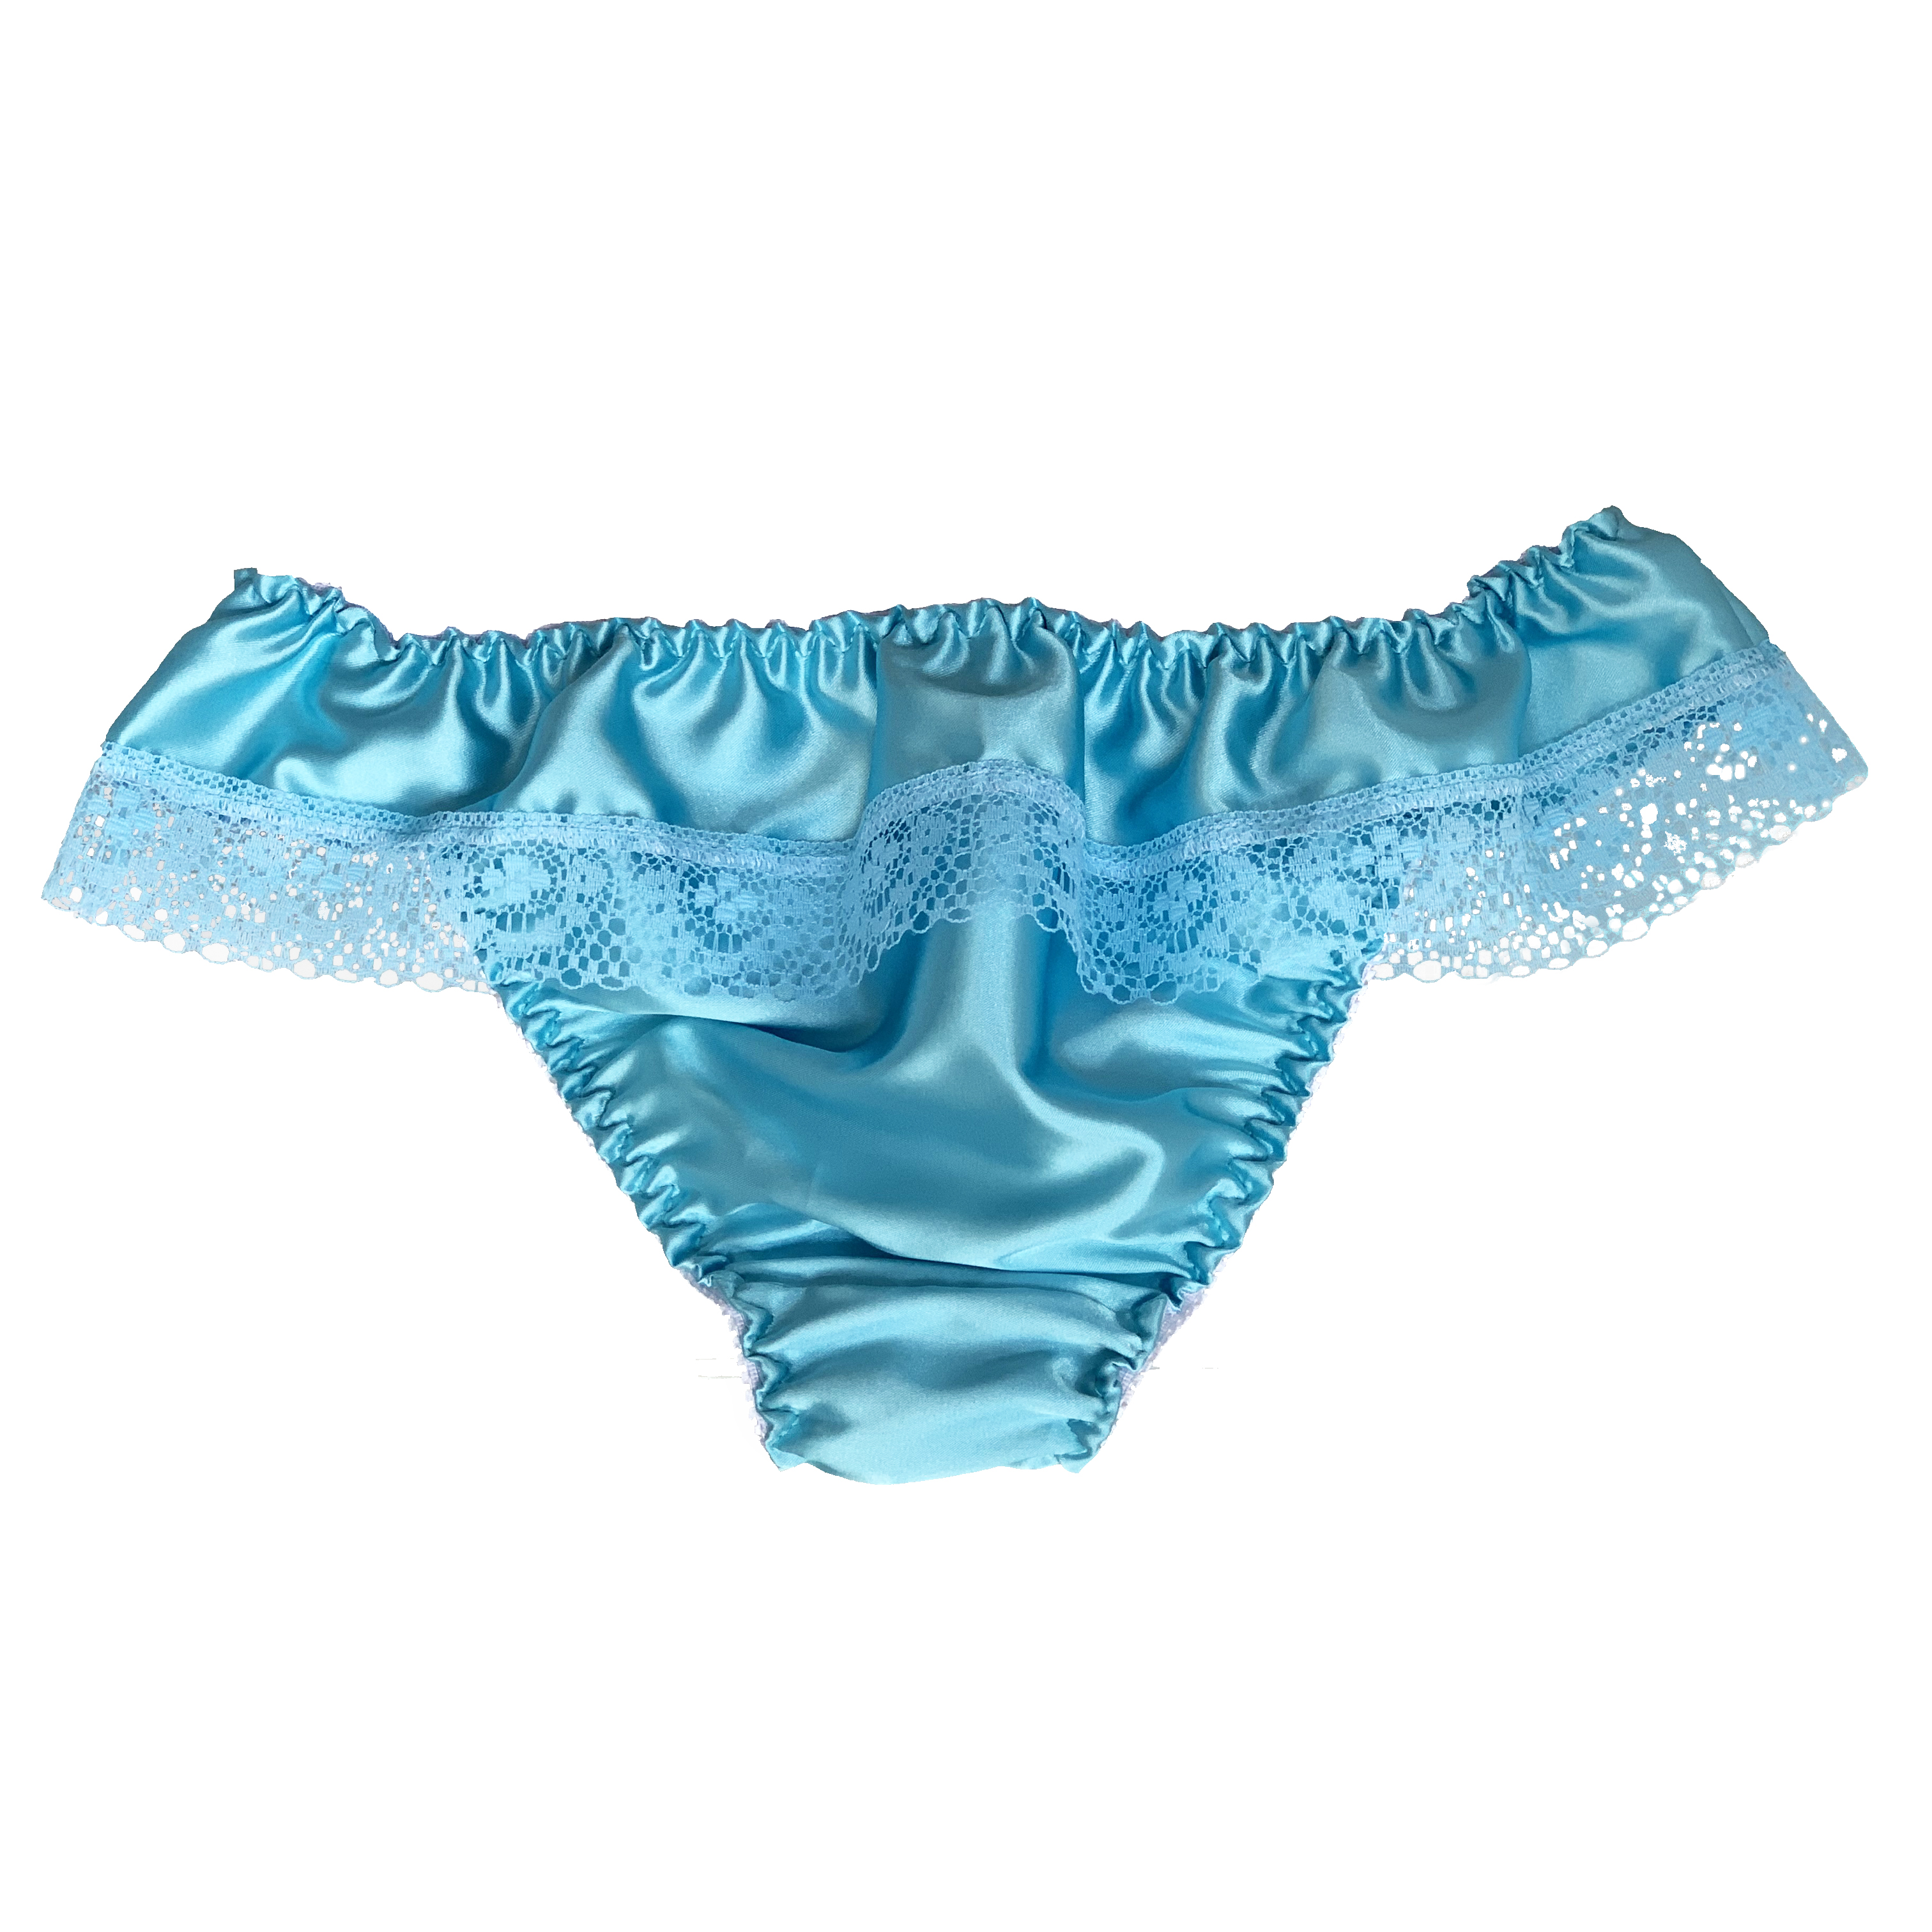 Aqua Blue Satin Frilly Lace Bikini Tanga Panties Knicker Underwear Size 10 20 Ebay